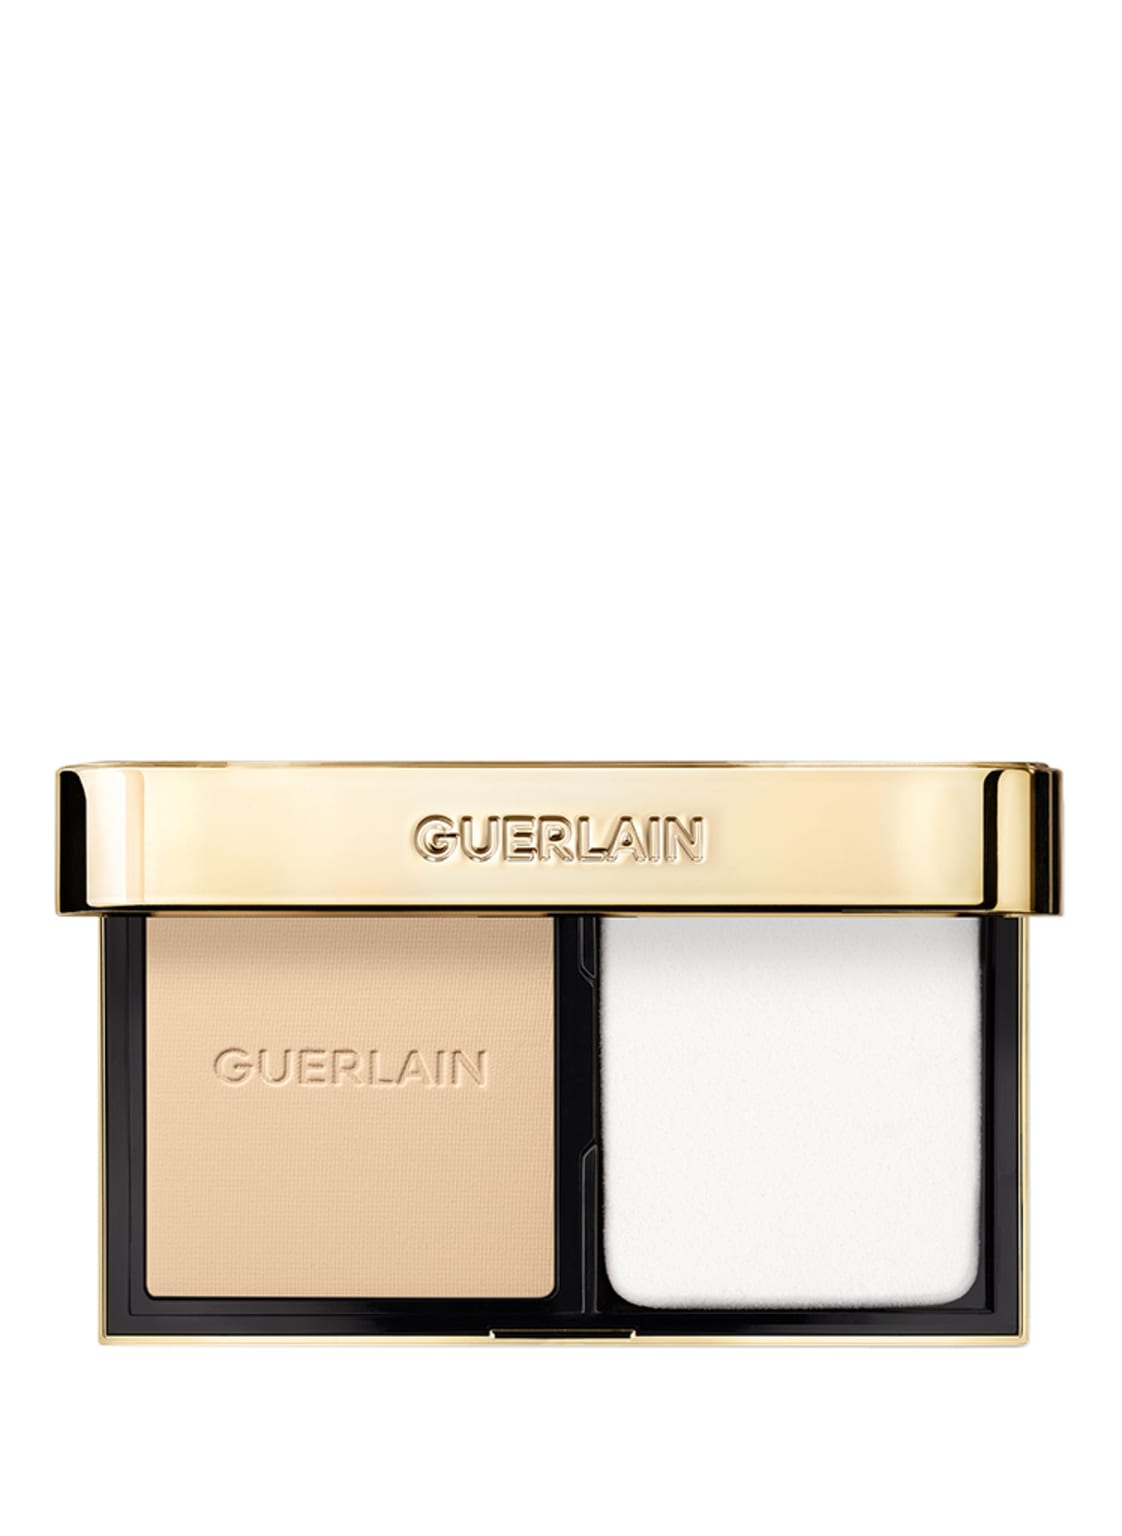 Guerlain Parure Gold Skin Control Kompakt Foundation von Guerlain